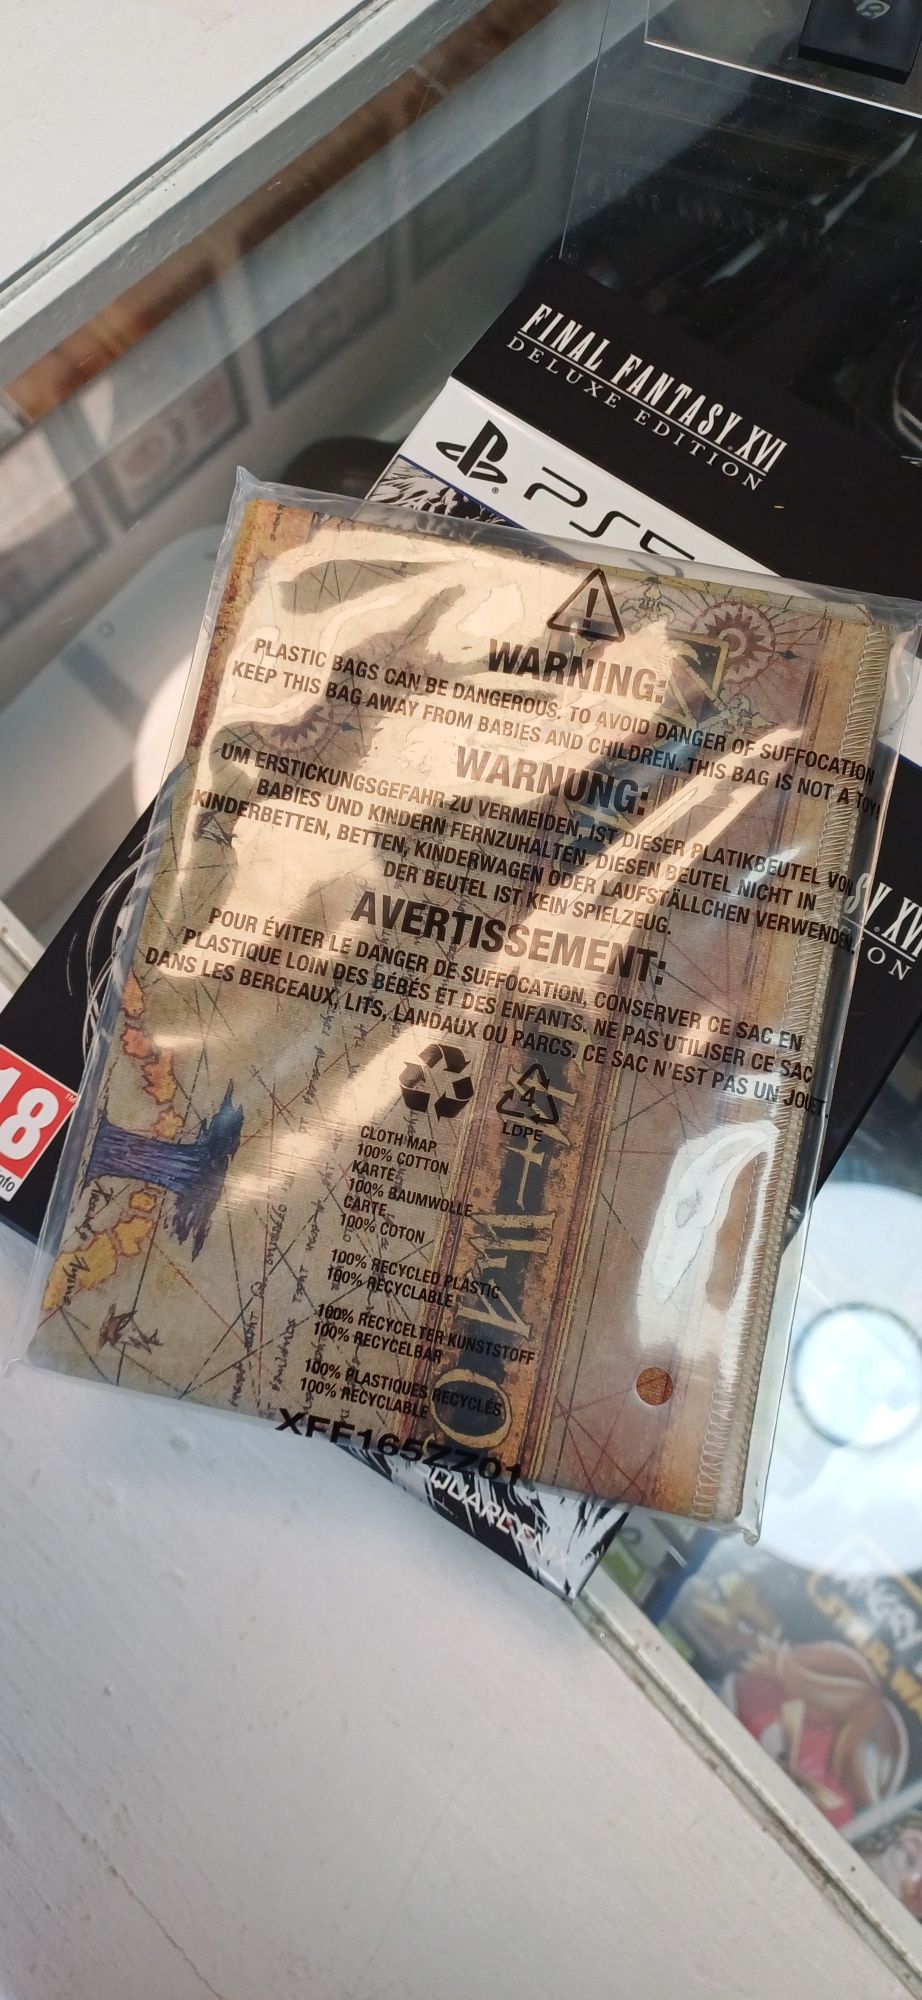 Final Fantasy XVI Deluxe Edition - PS5